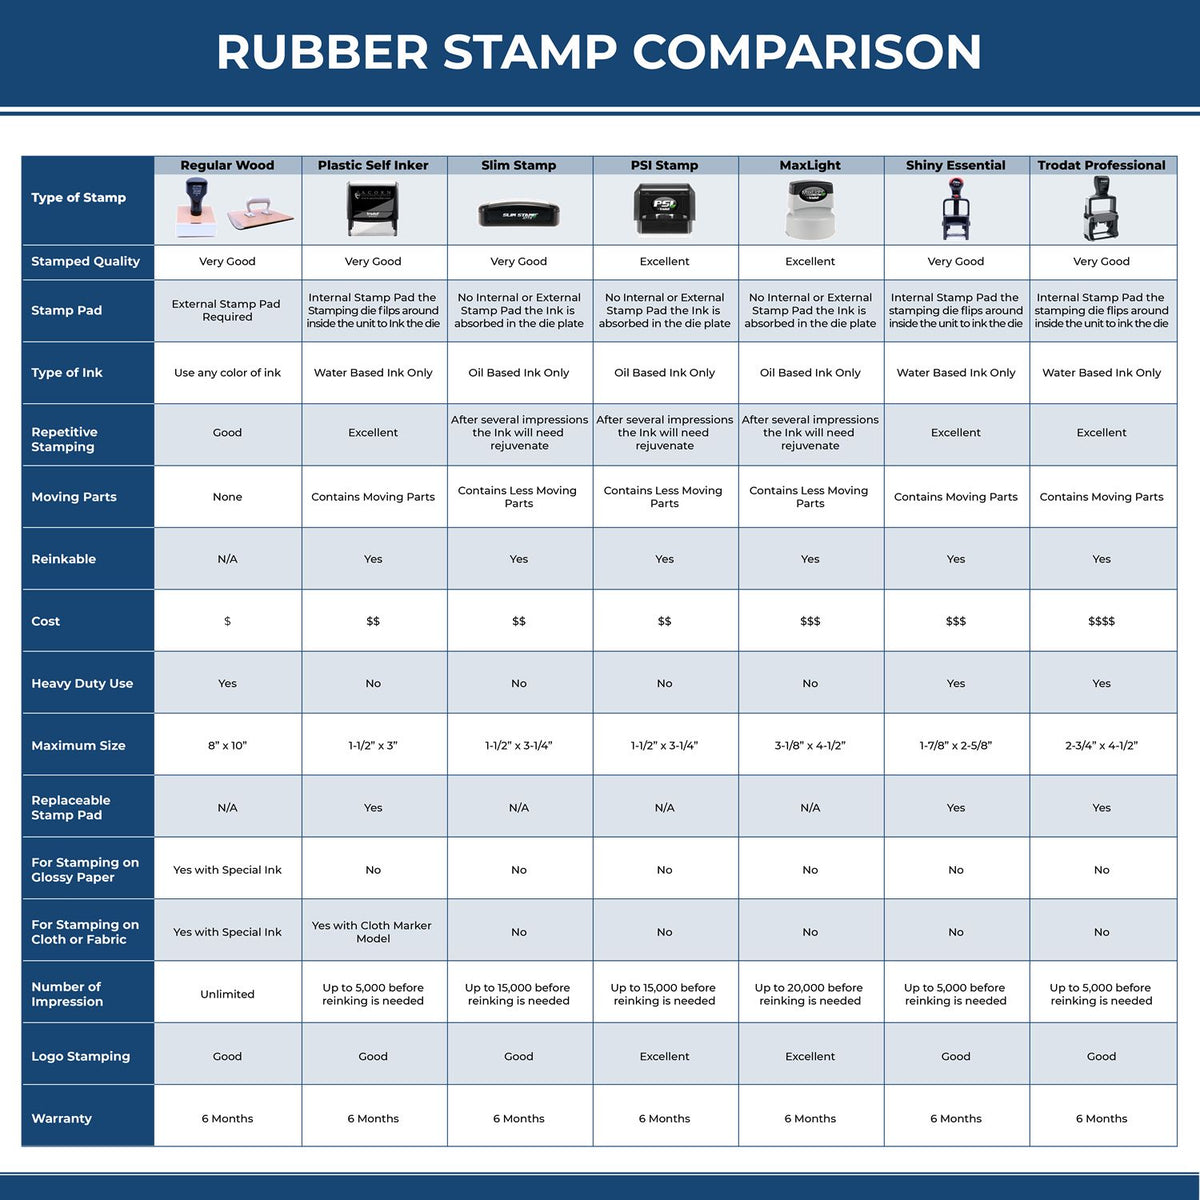 Cancelado with Box Rubber Stamp 4494R Rubber Stamp Comparison